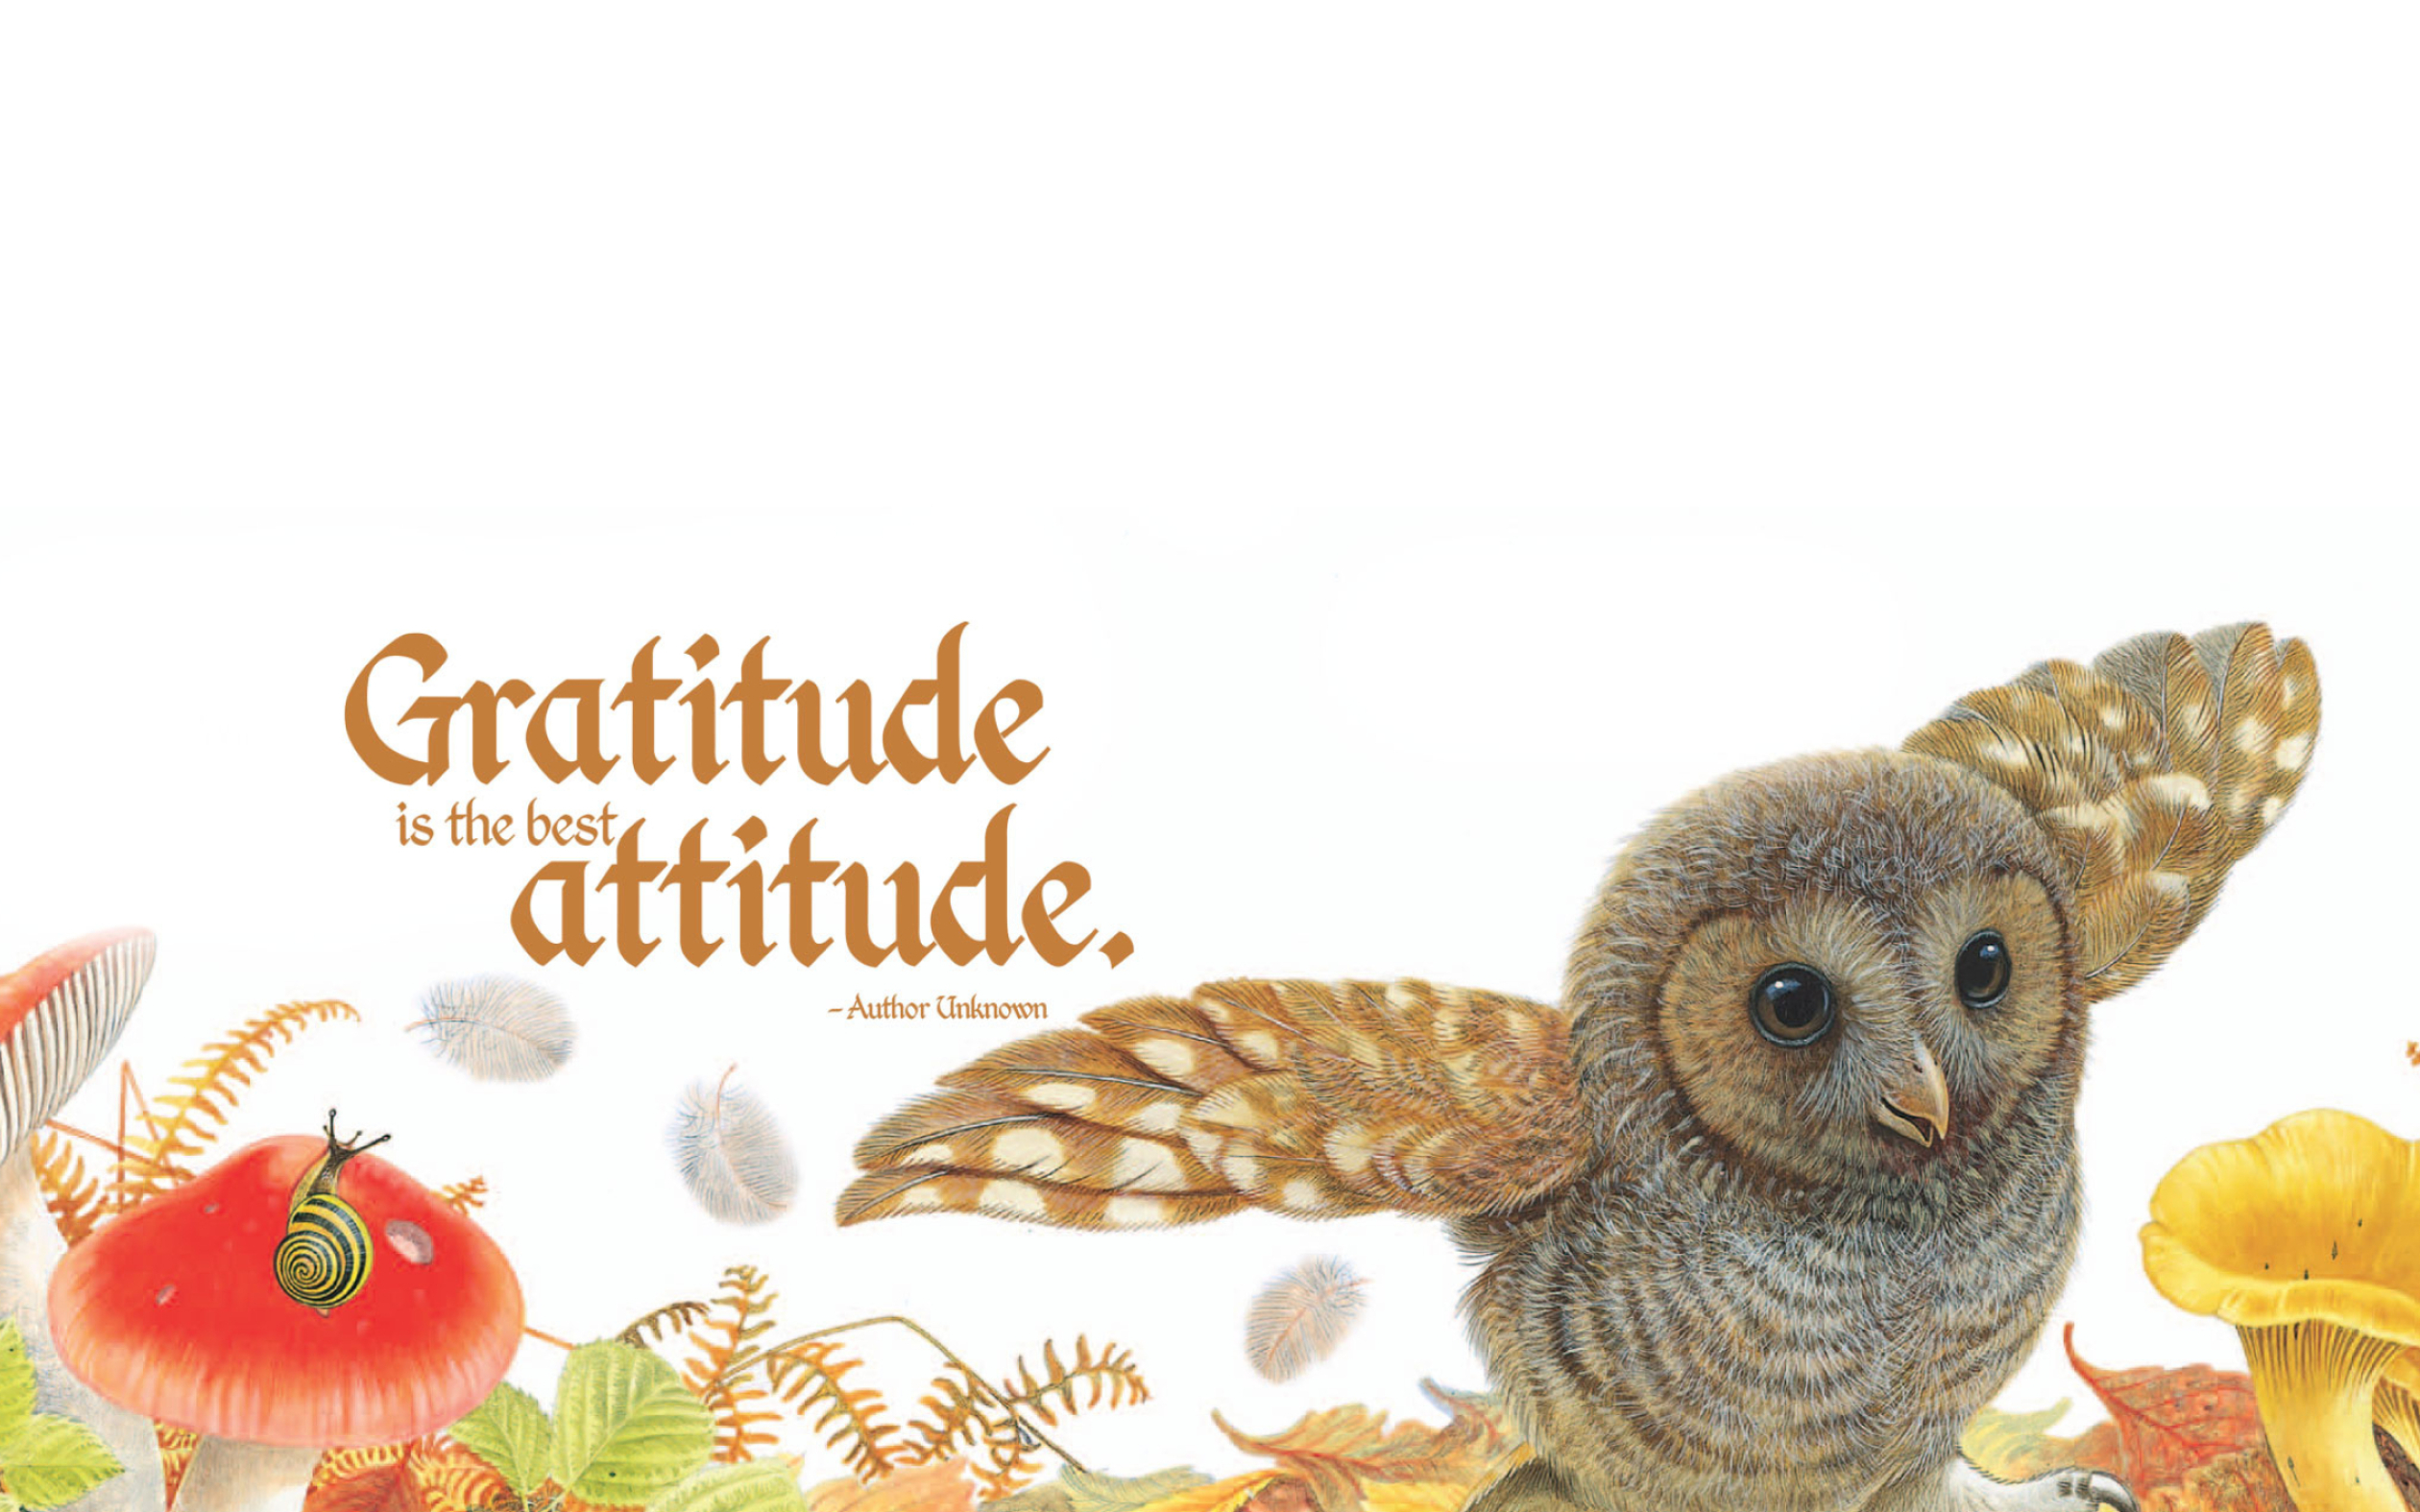 Gratitude: The best attitude, The feeling of appreciation, Personal slogan. 2520x1580 HD Wallpaper.